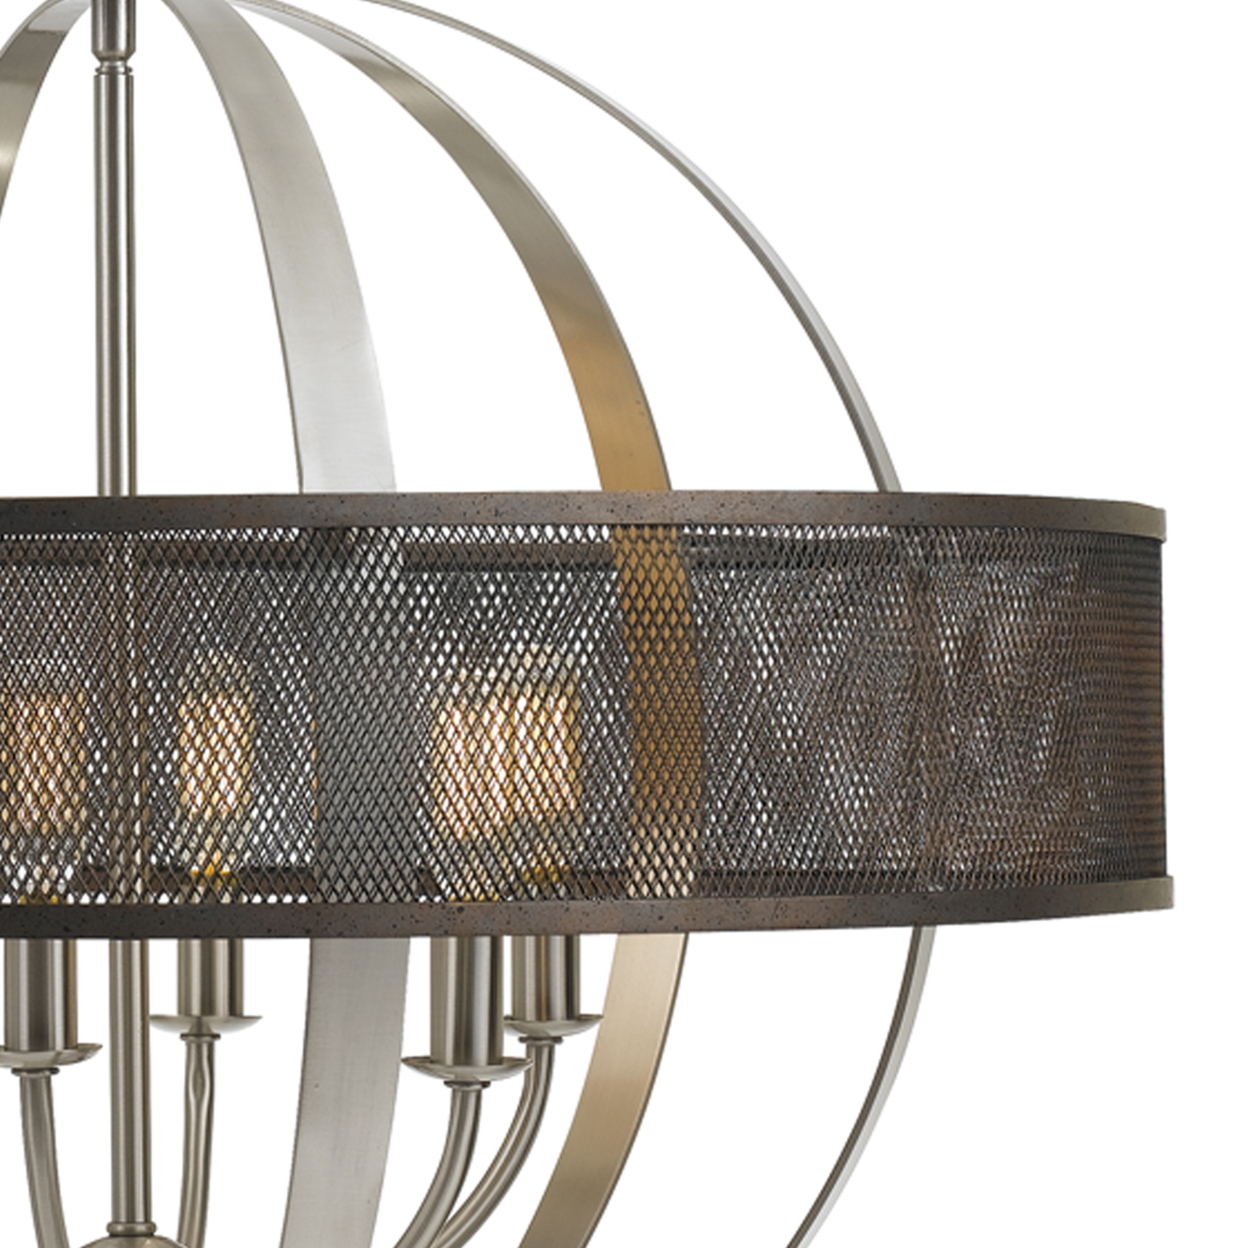 6 Bulb Round Metal Chandelier With Mesh Design, Chrome And Gray- Saltoro Sherpi